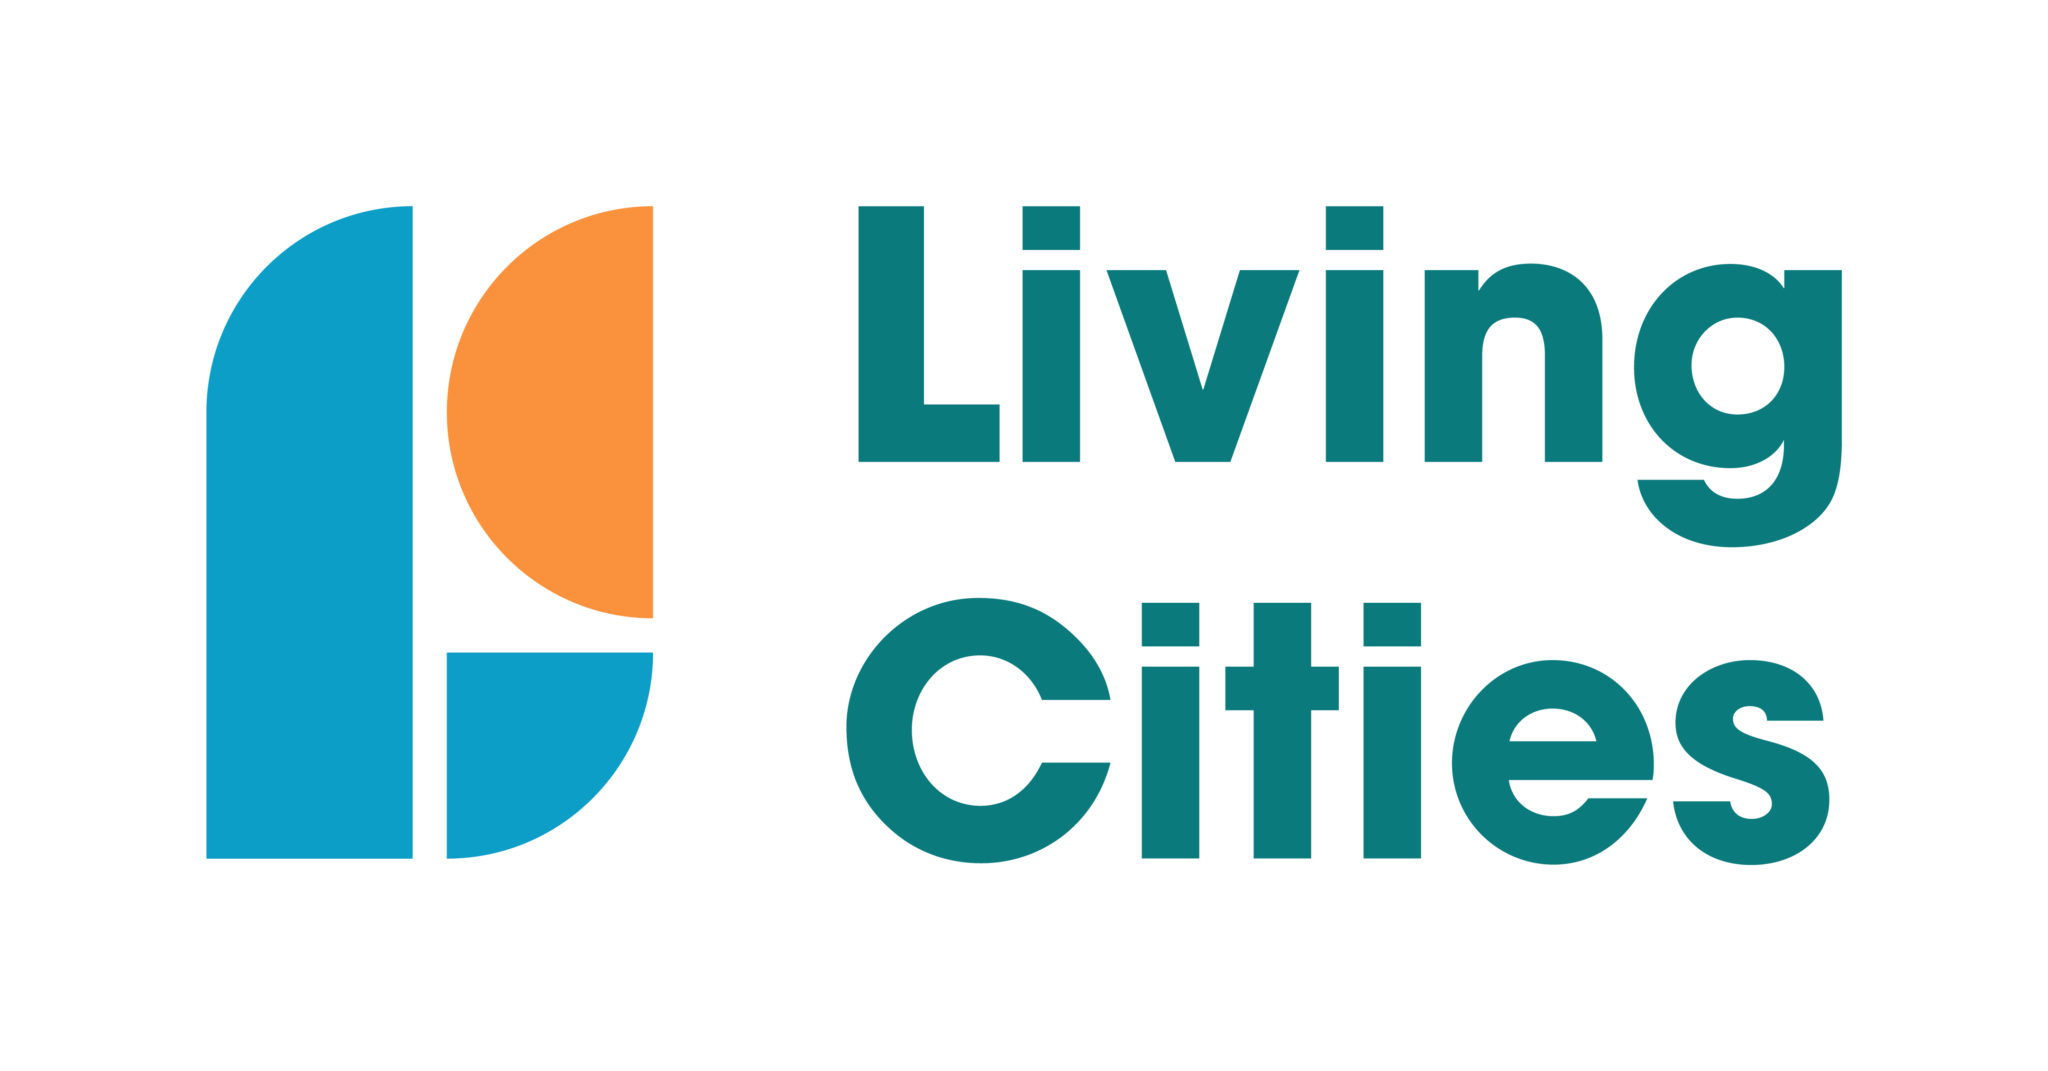 Living Cities logo